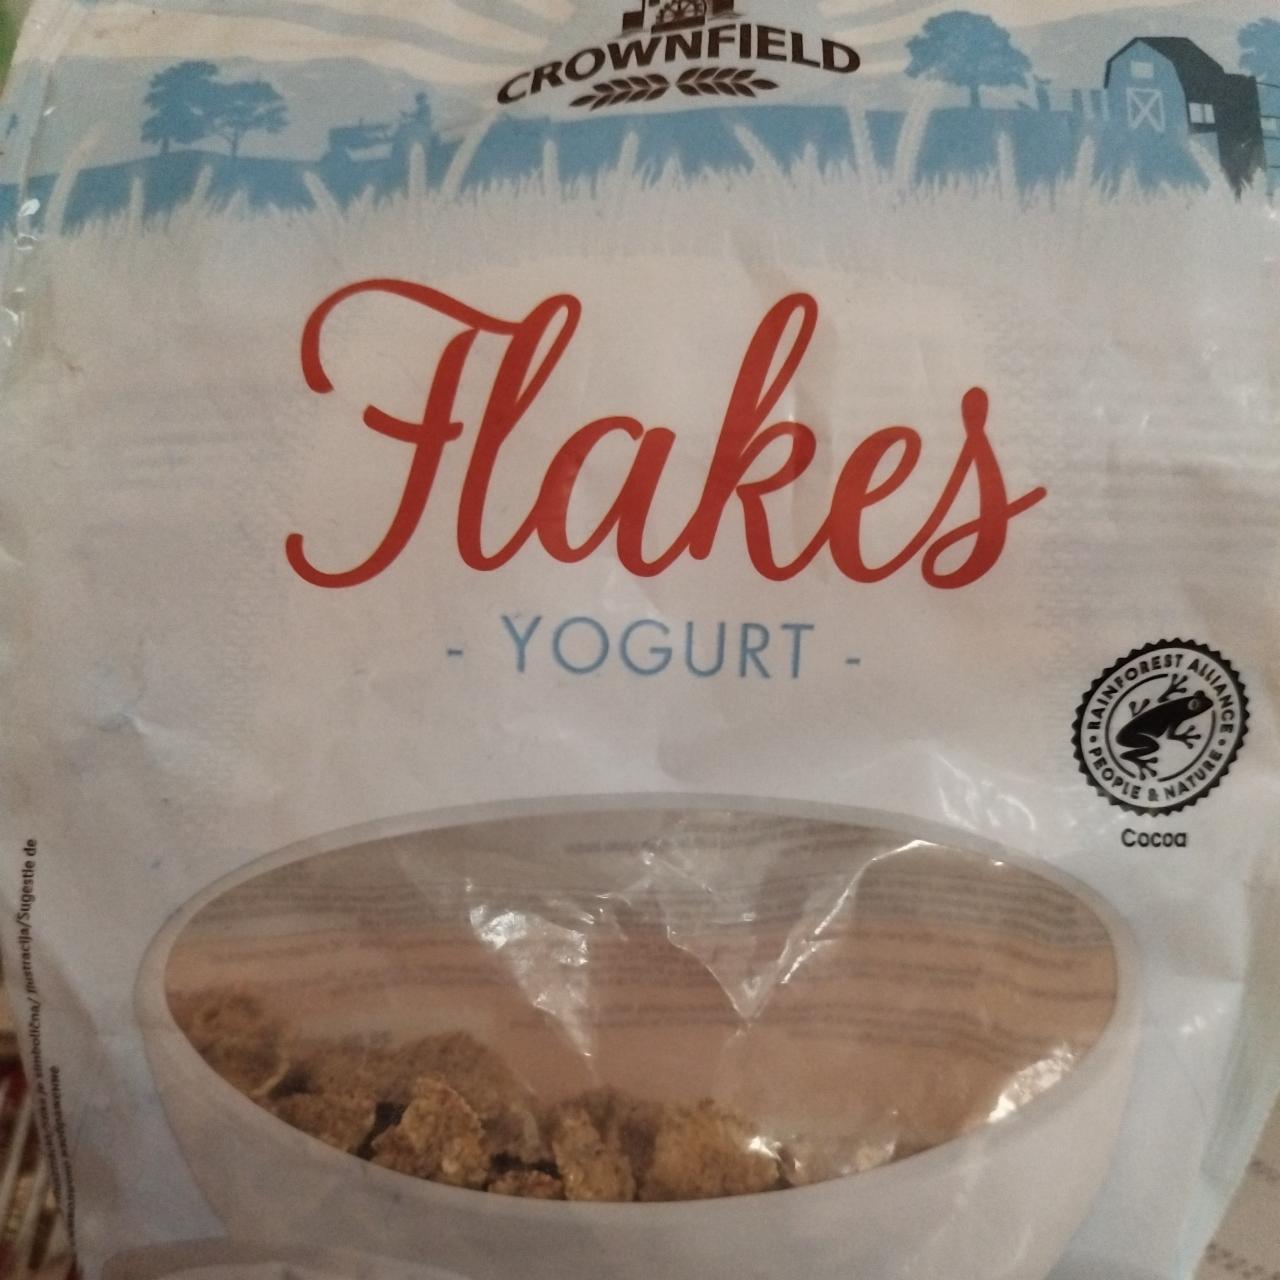 Fotografie - Flakes Yogurt Crownfield